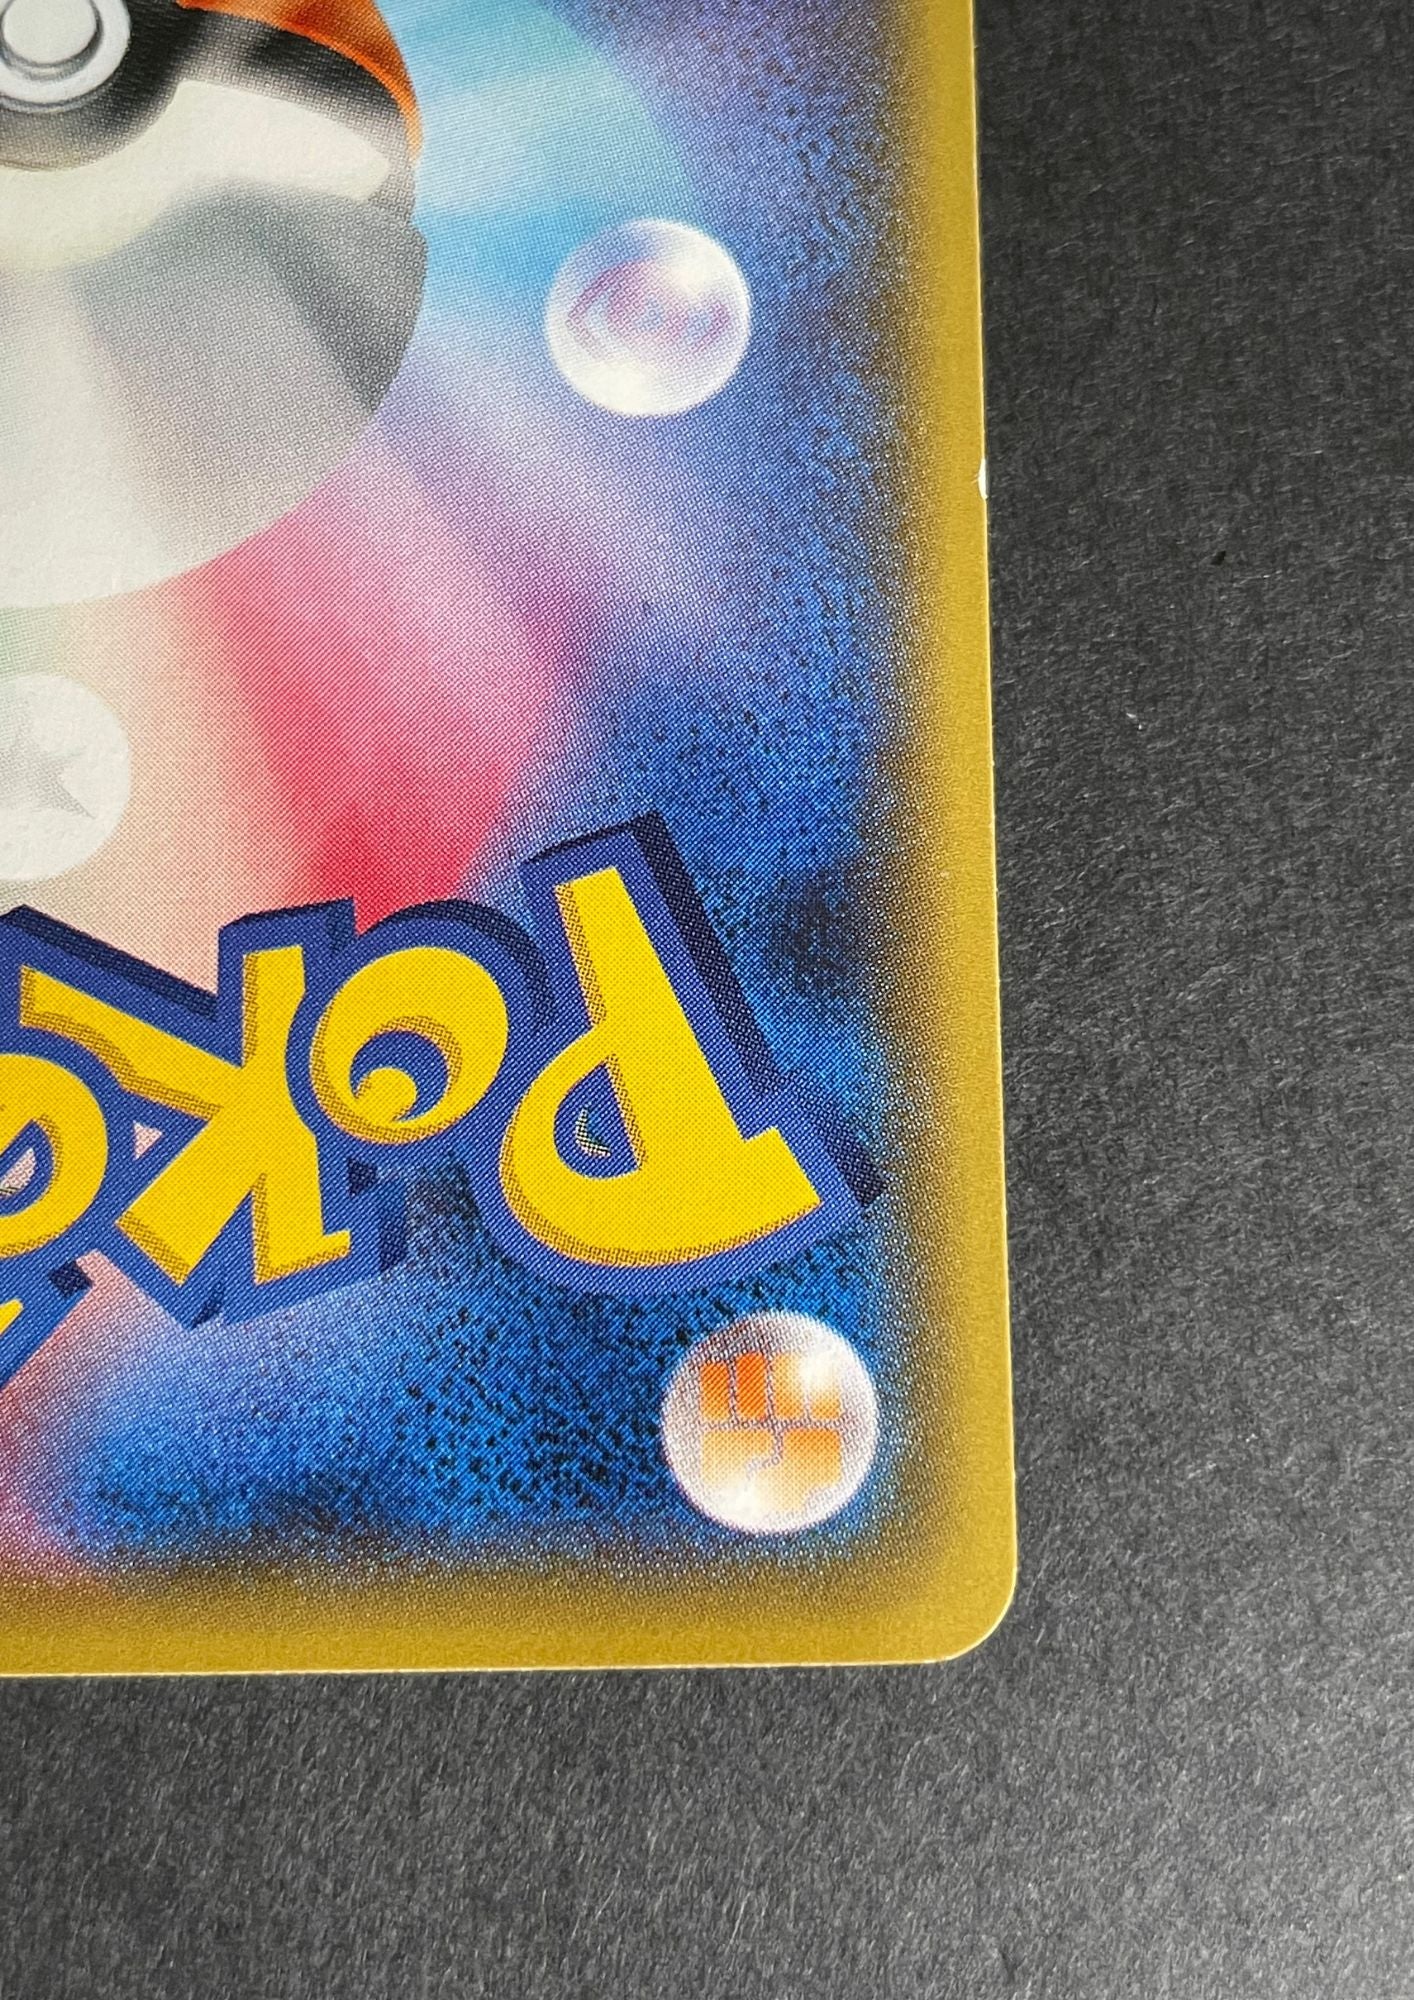 07 Report Pokémon Trading Card Game: Cartas Prisma, Pikachu de Ash